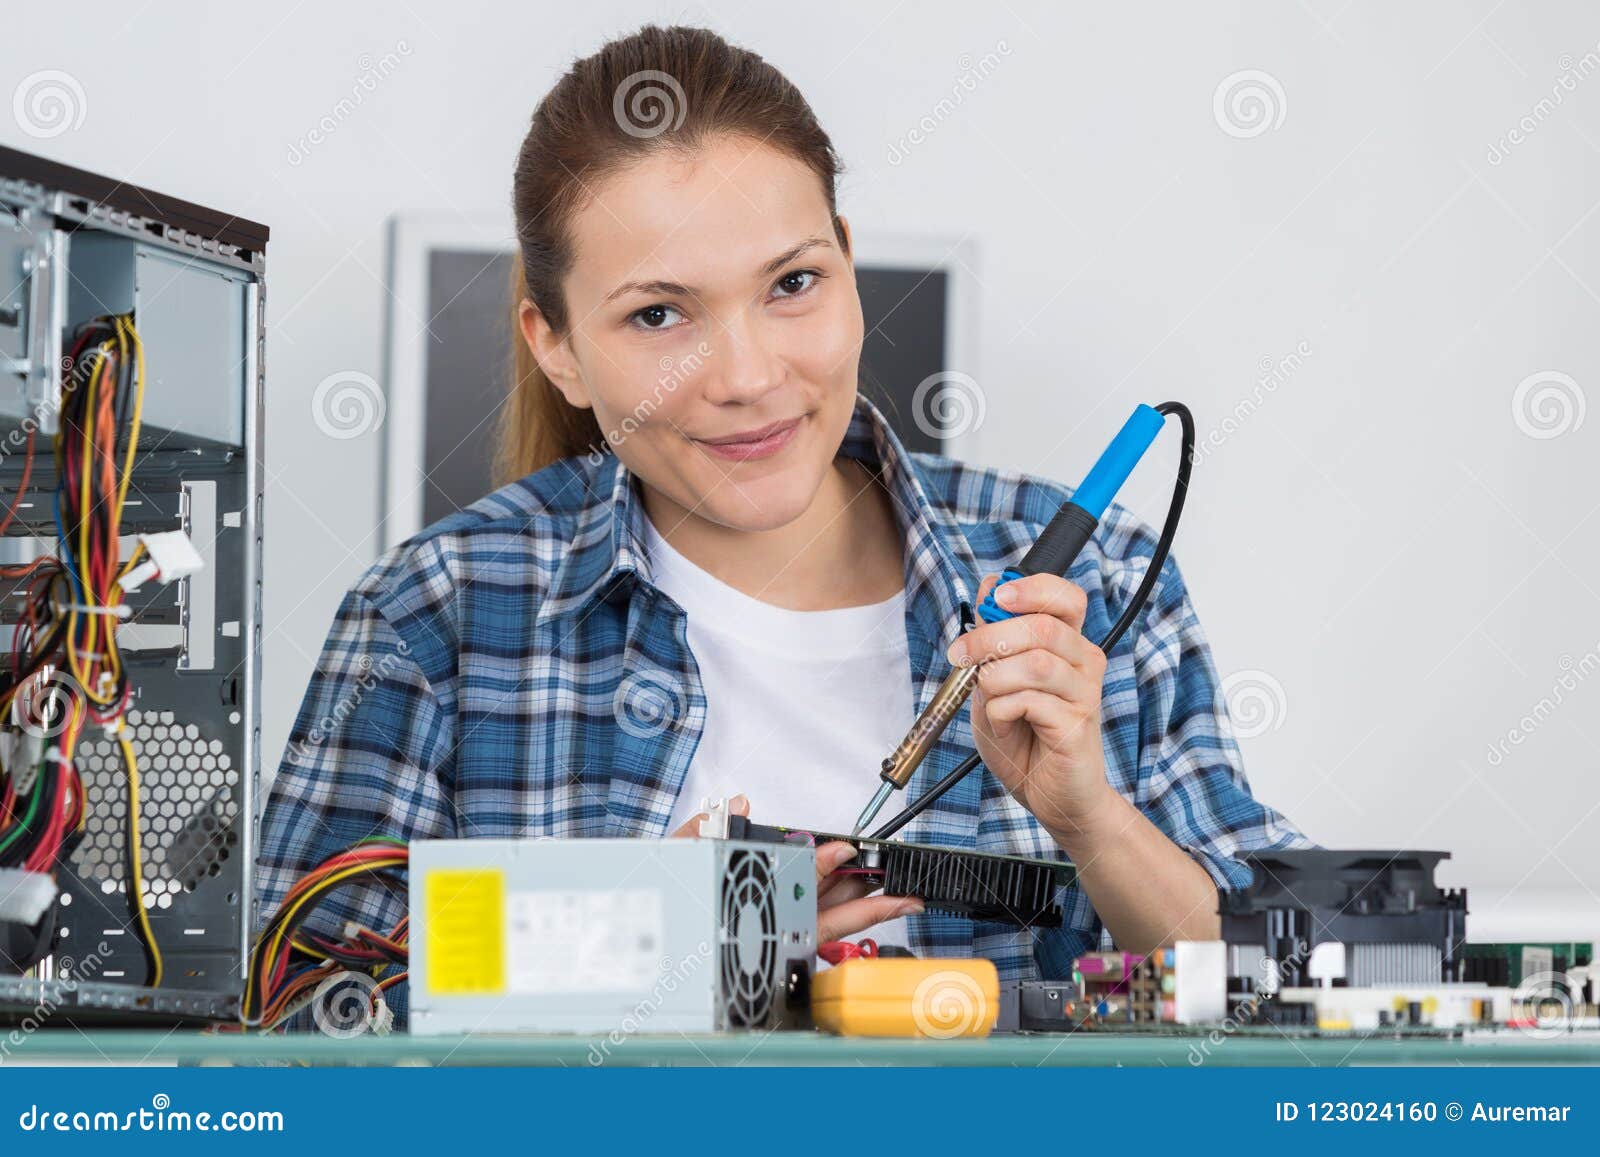 soldering-iron-electronic-printed-board-soldering-iron-electronic-printed-board-female-123024160.jpg